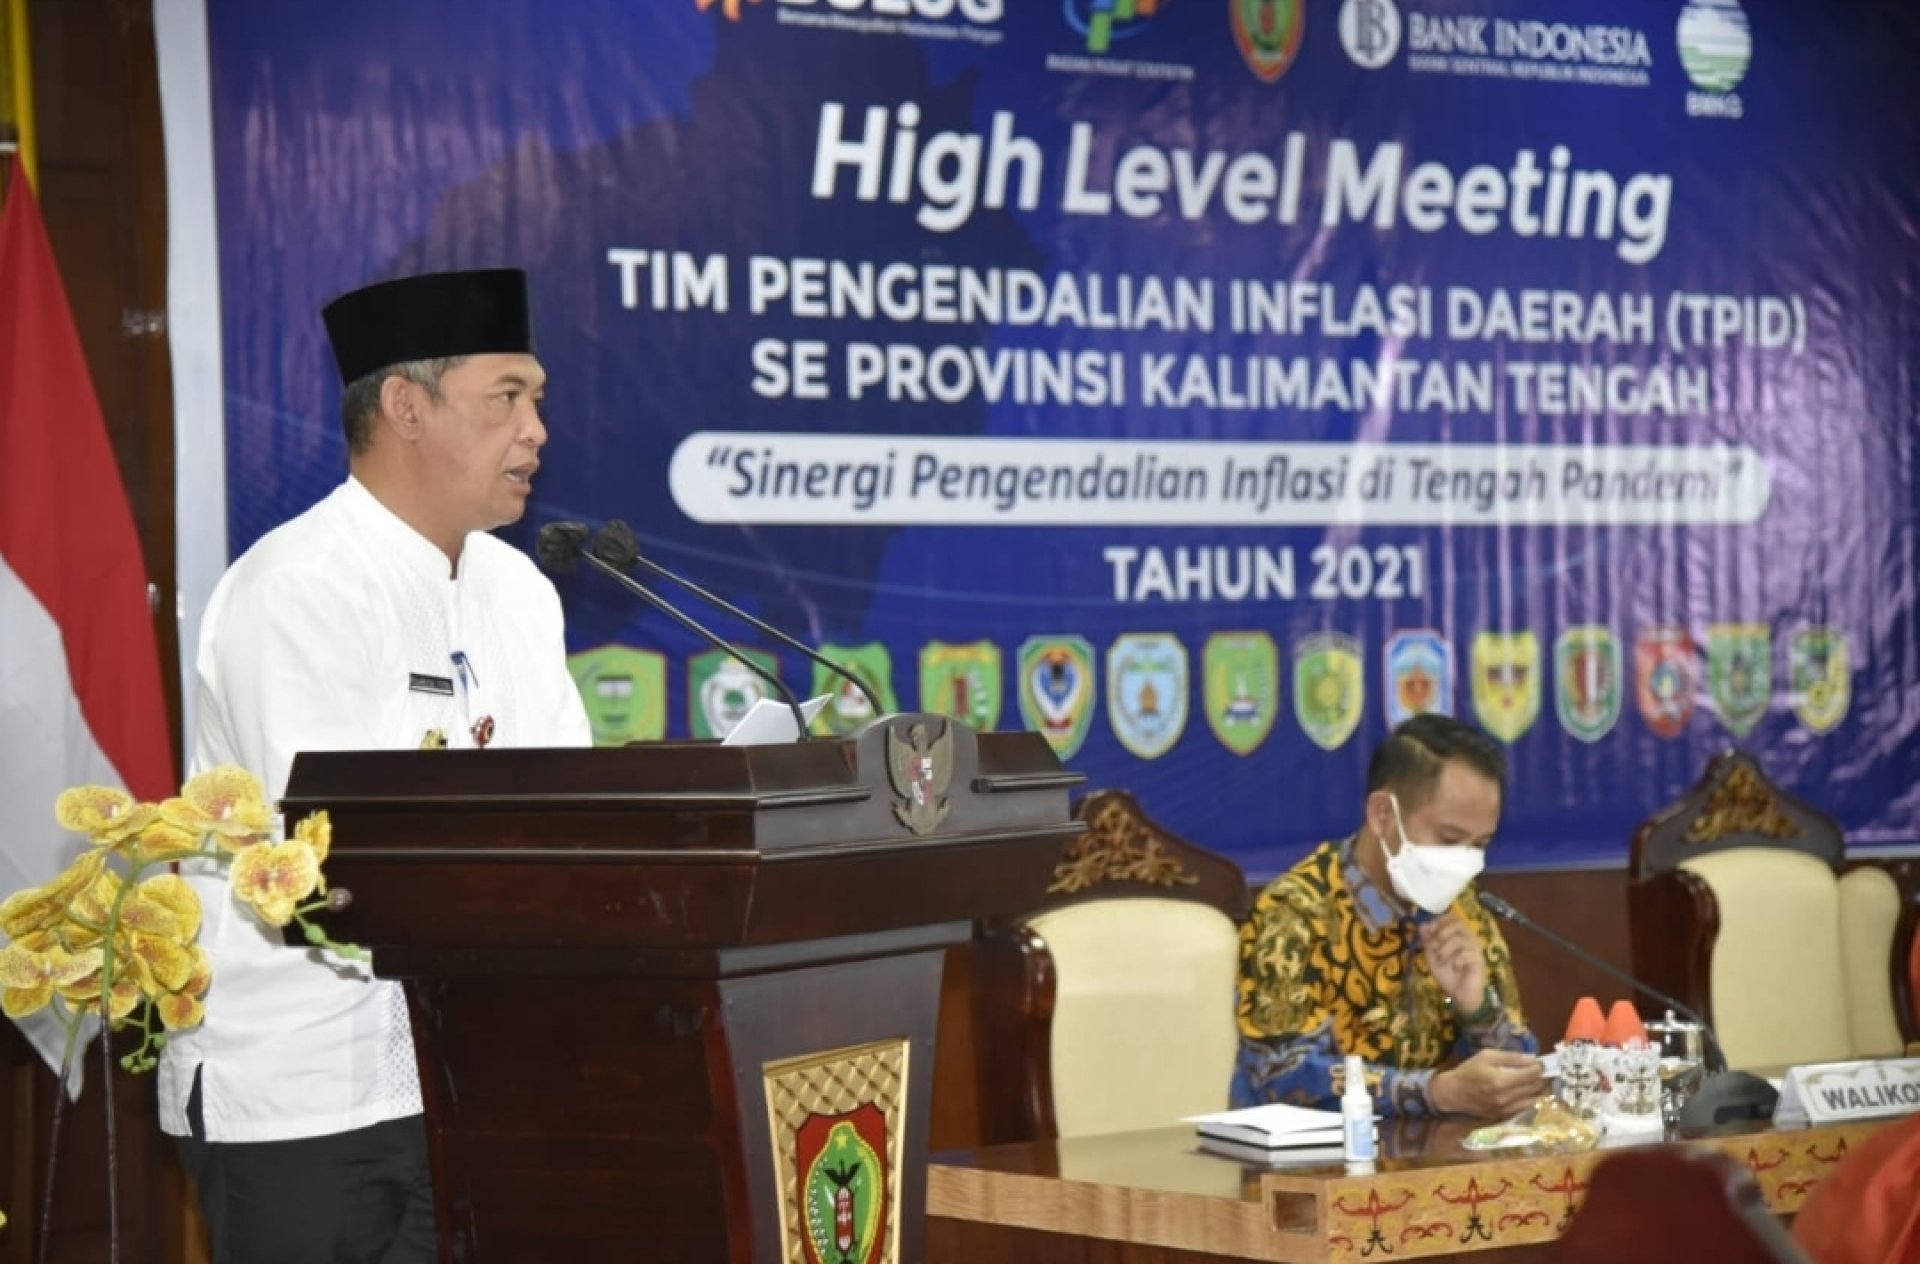 Perkuat Sinergi Pengendalian Inflasi, Rakor High Level Meeting TPID Se-Kalteng Digelar